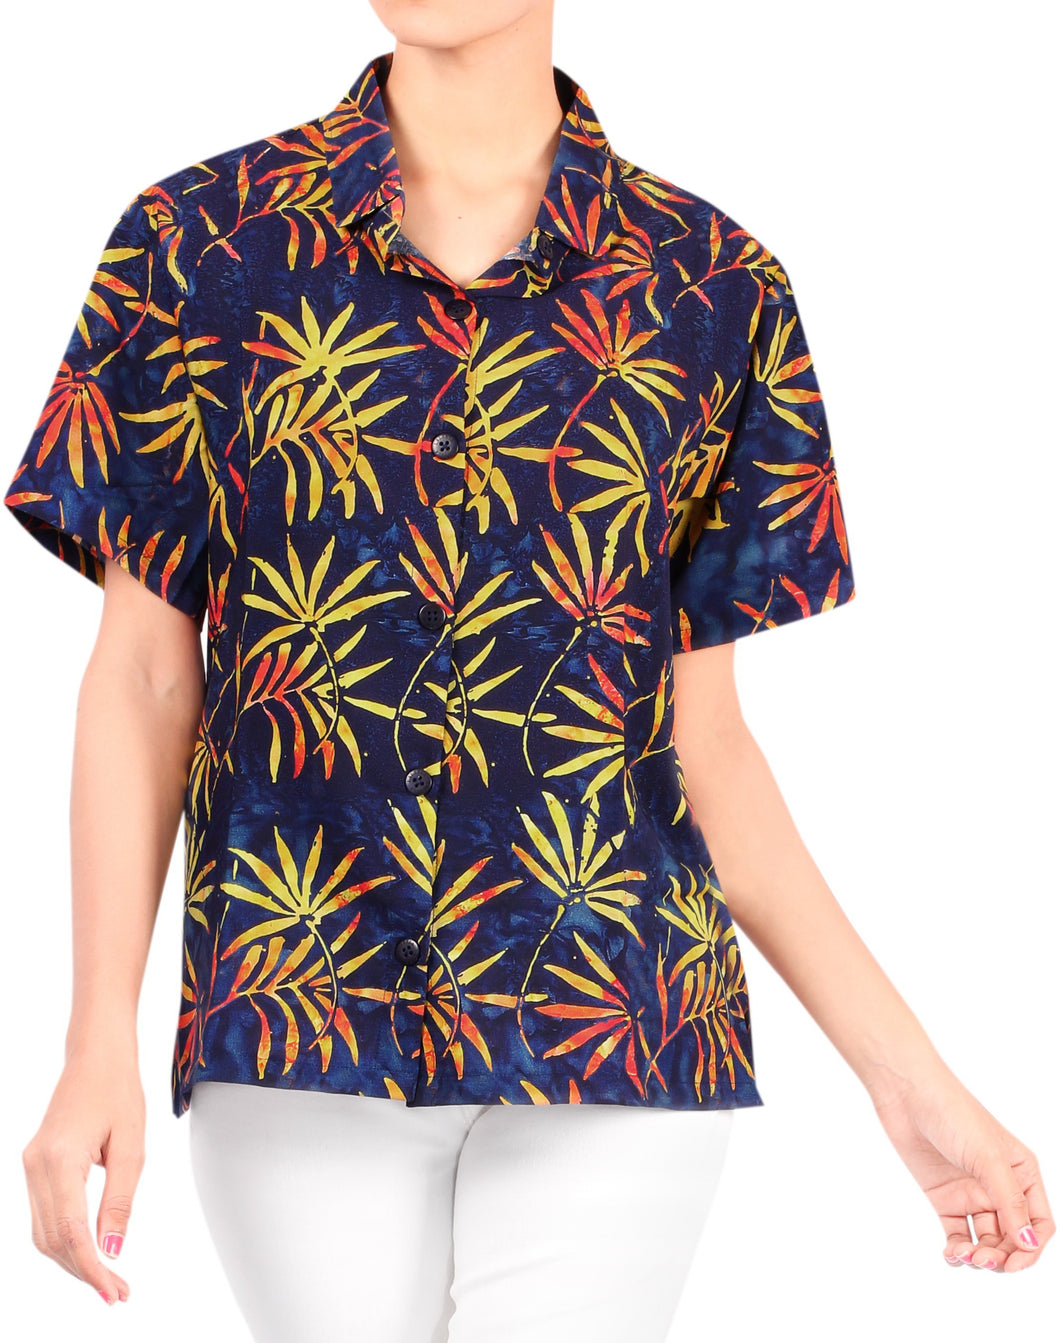 la-leela-womens-golden-floral-print-relaxed-fit-hawaiian-aloha-tropical-beach-blouse-short-sleeve-shirt-navy-blue